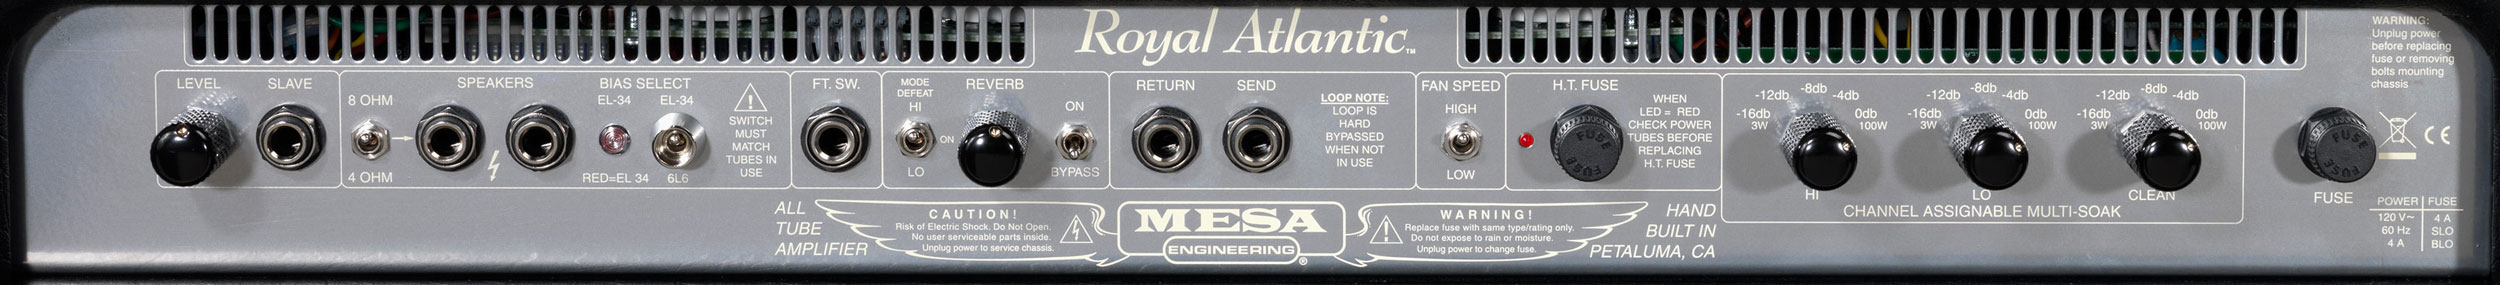 Royal Atlantic RA-100 Rear Panel